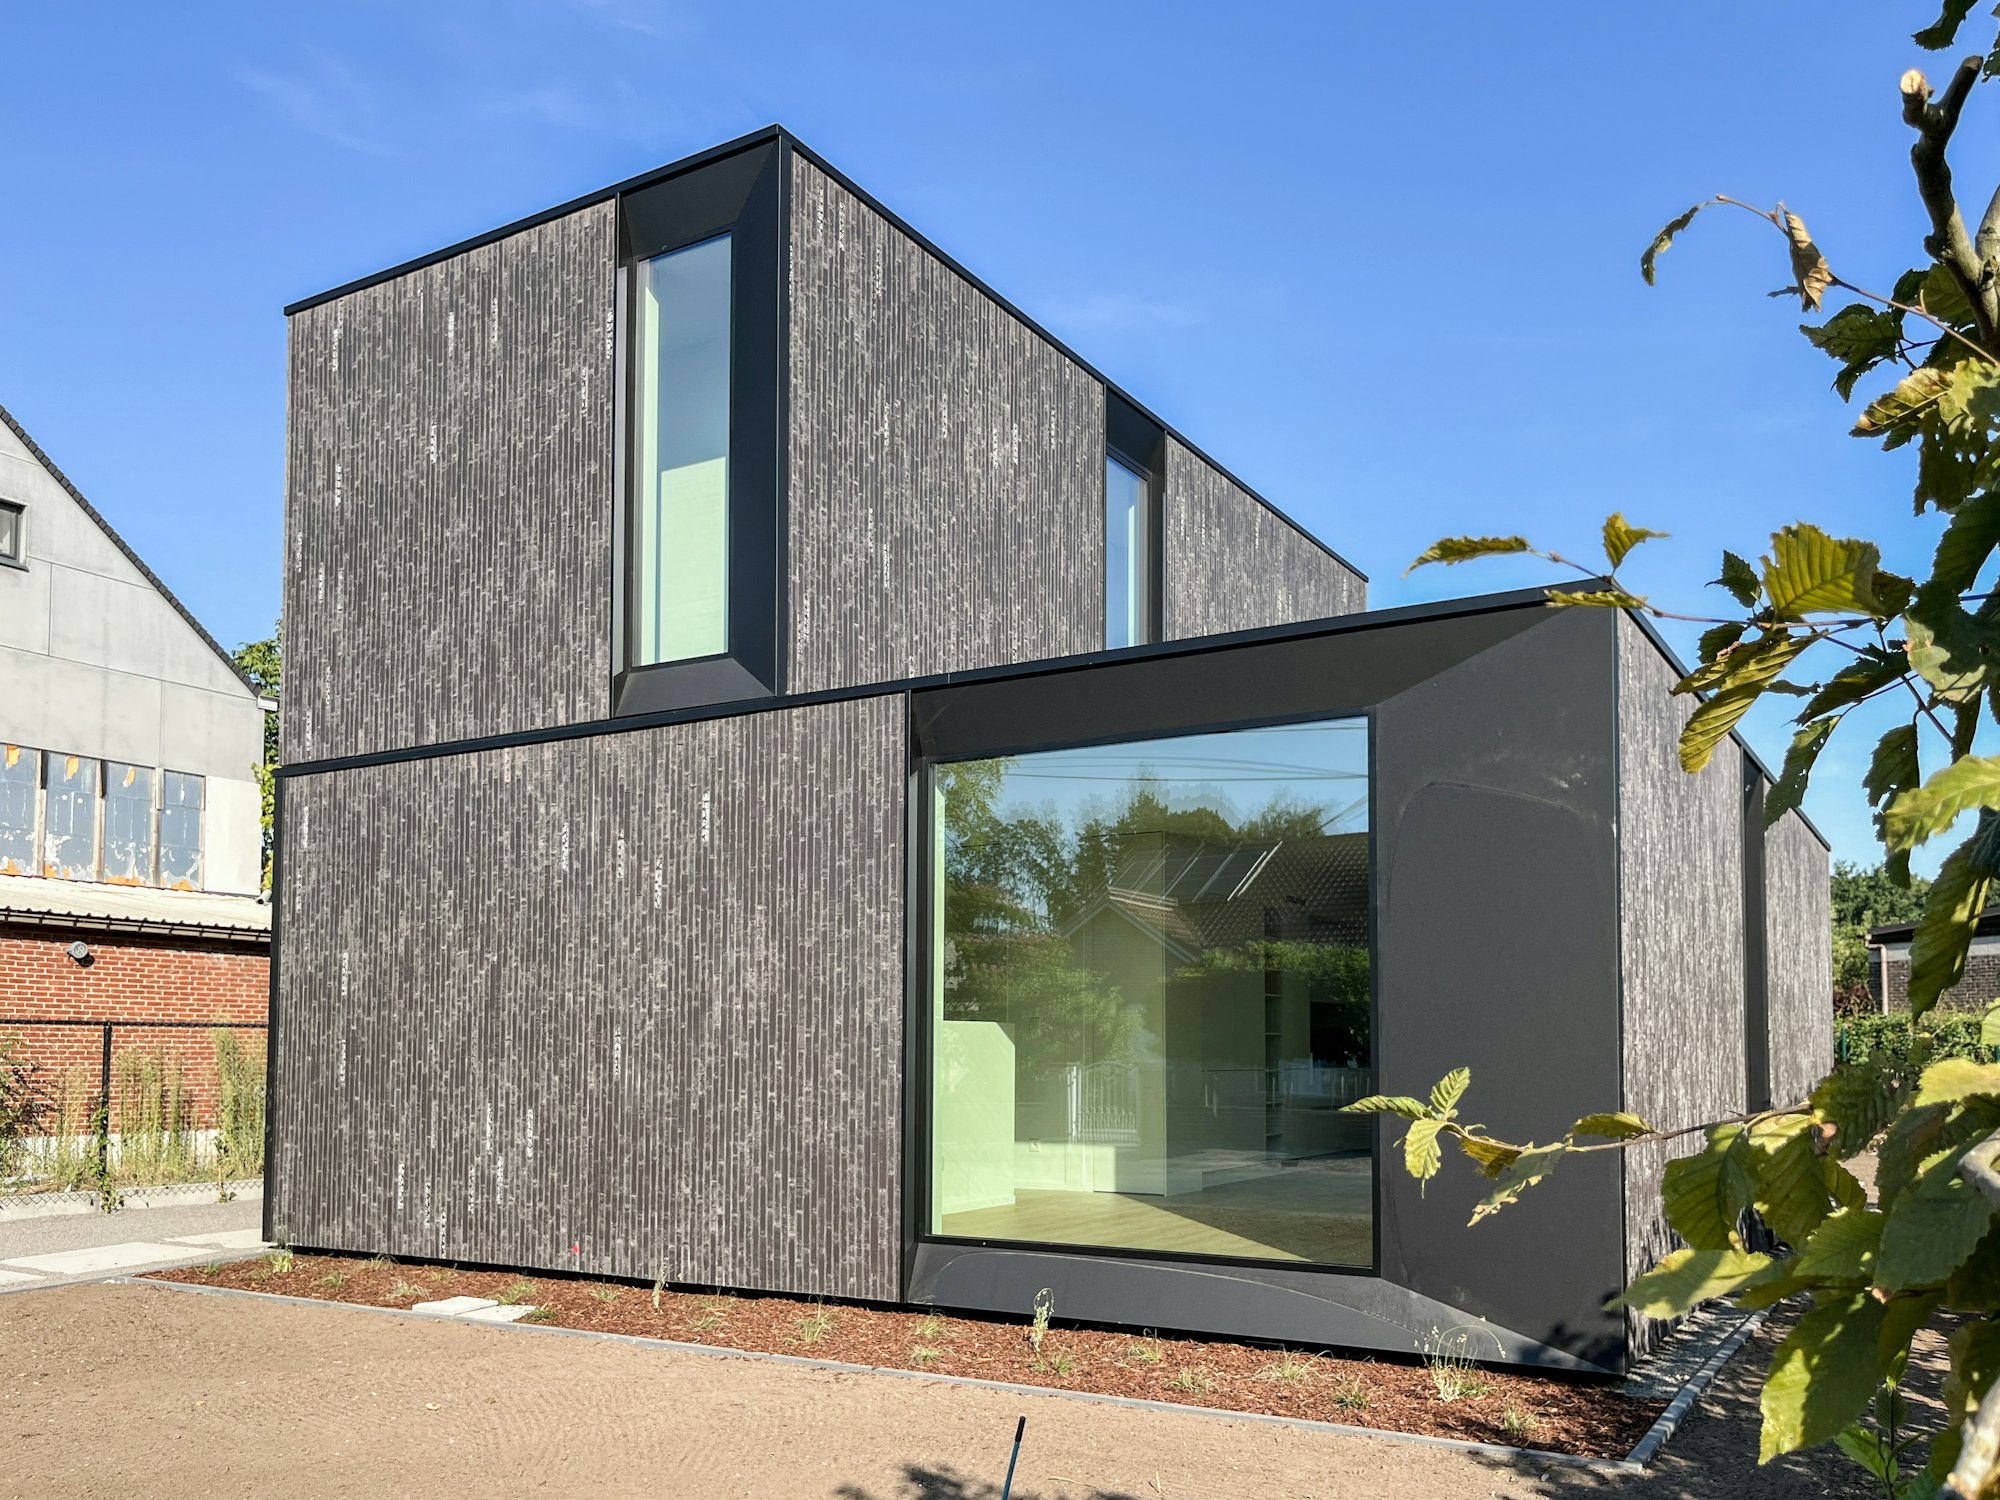 Skilpod #135 — houtskeletbouw woning met 3 slaapkamers, modern design in zwarte steen